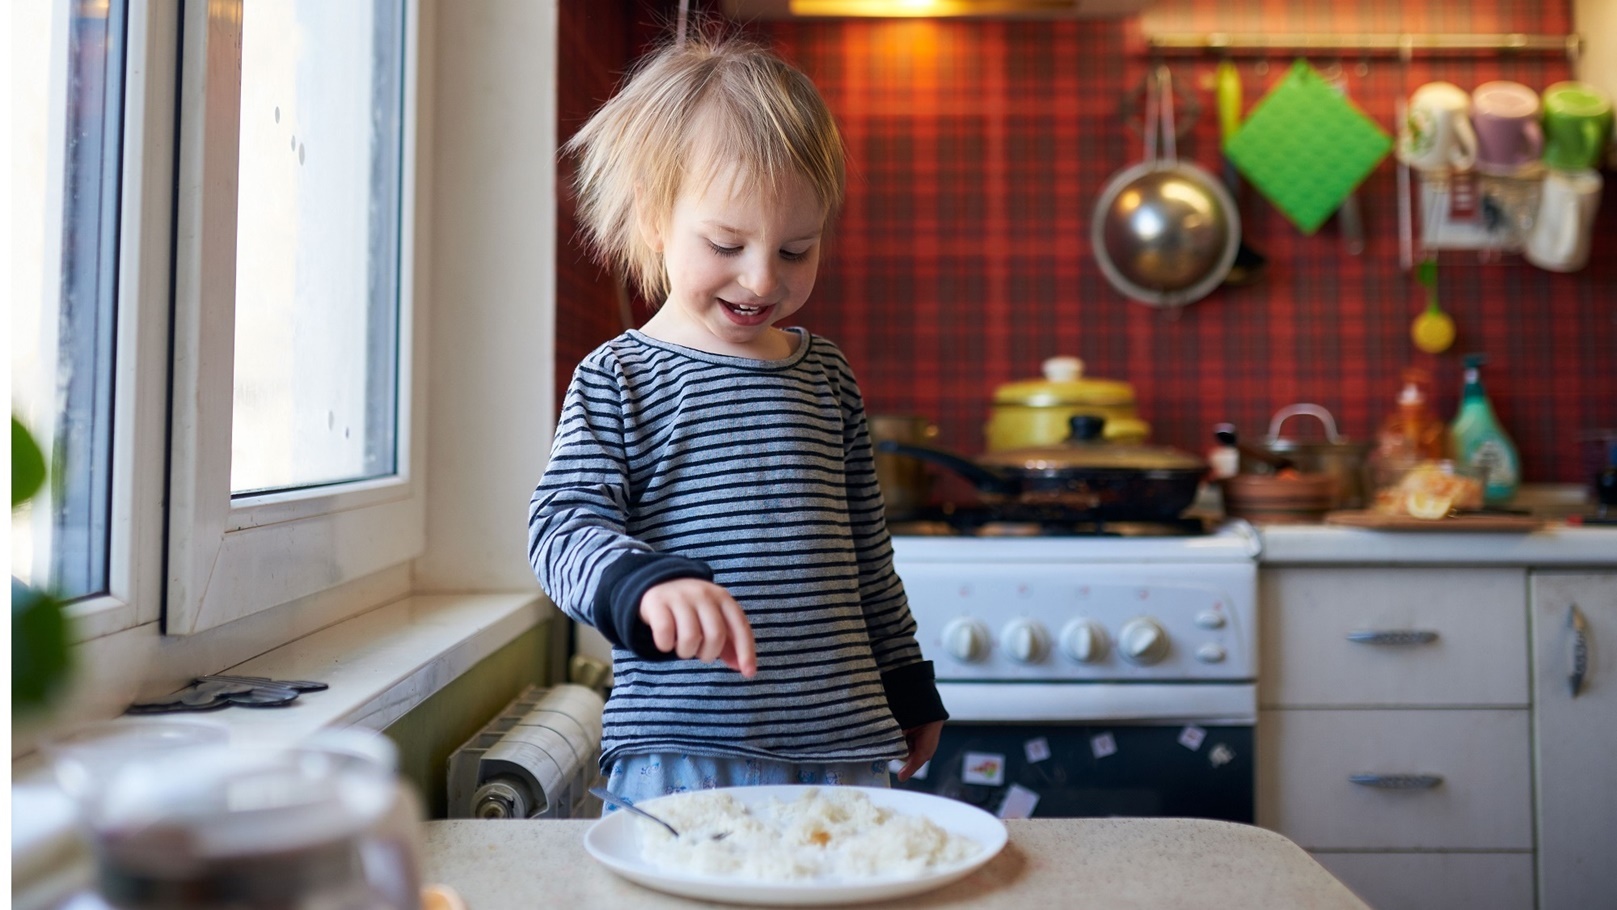 funny-blond-baby-eating-rice-on-kitchen-2022-01-24-19-53-34-utc